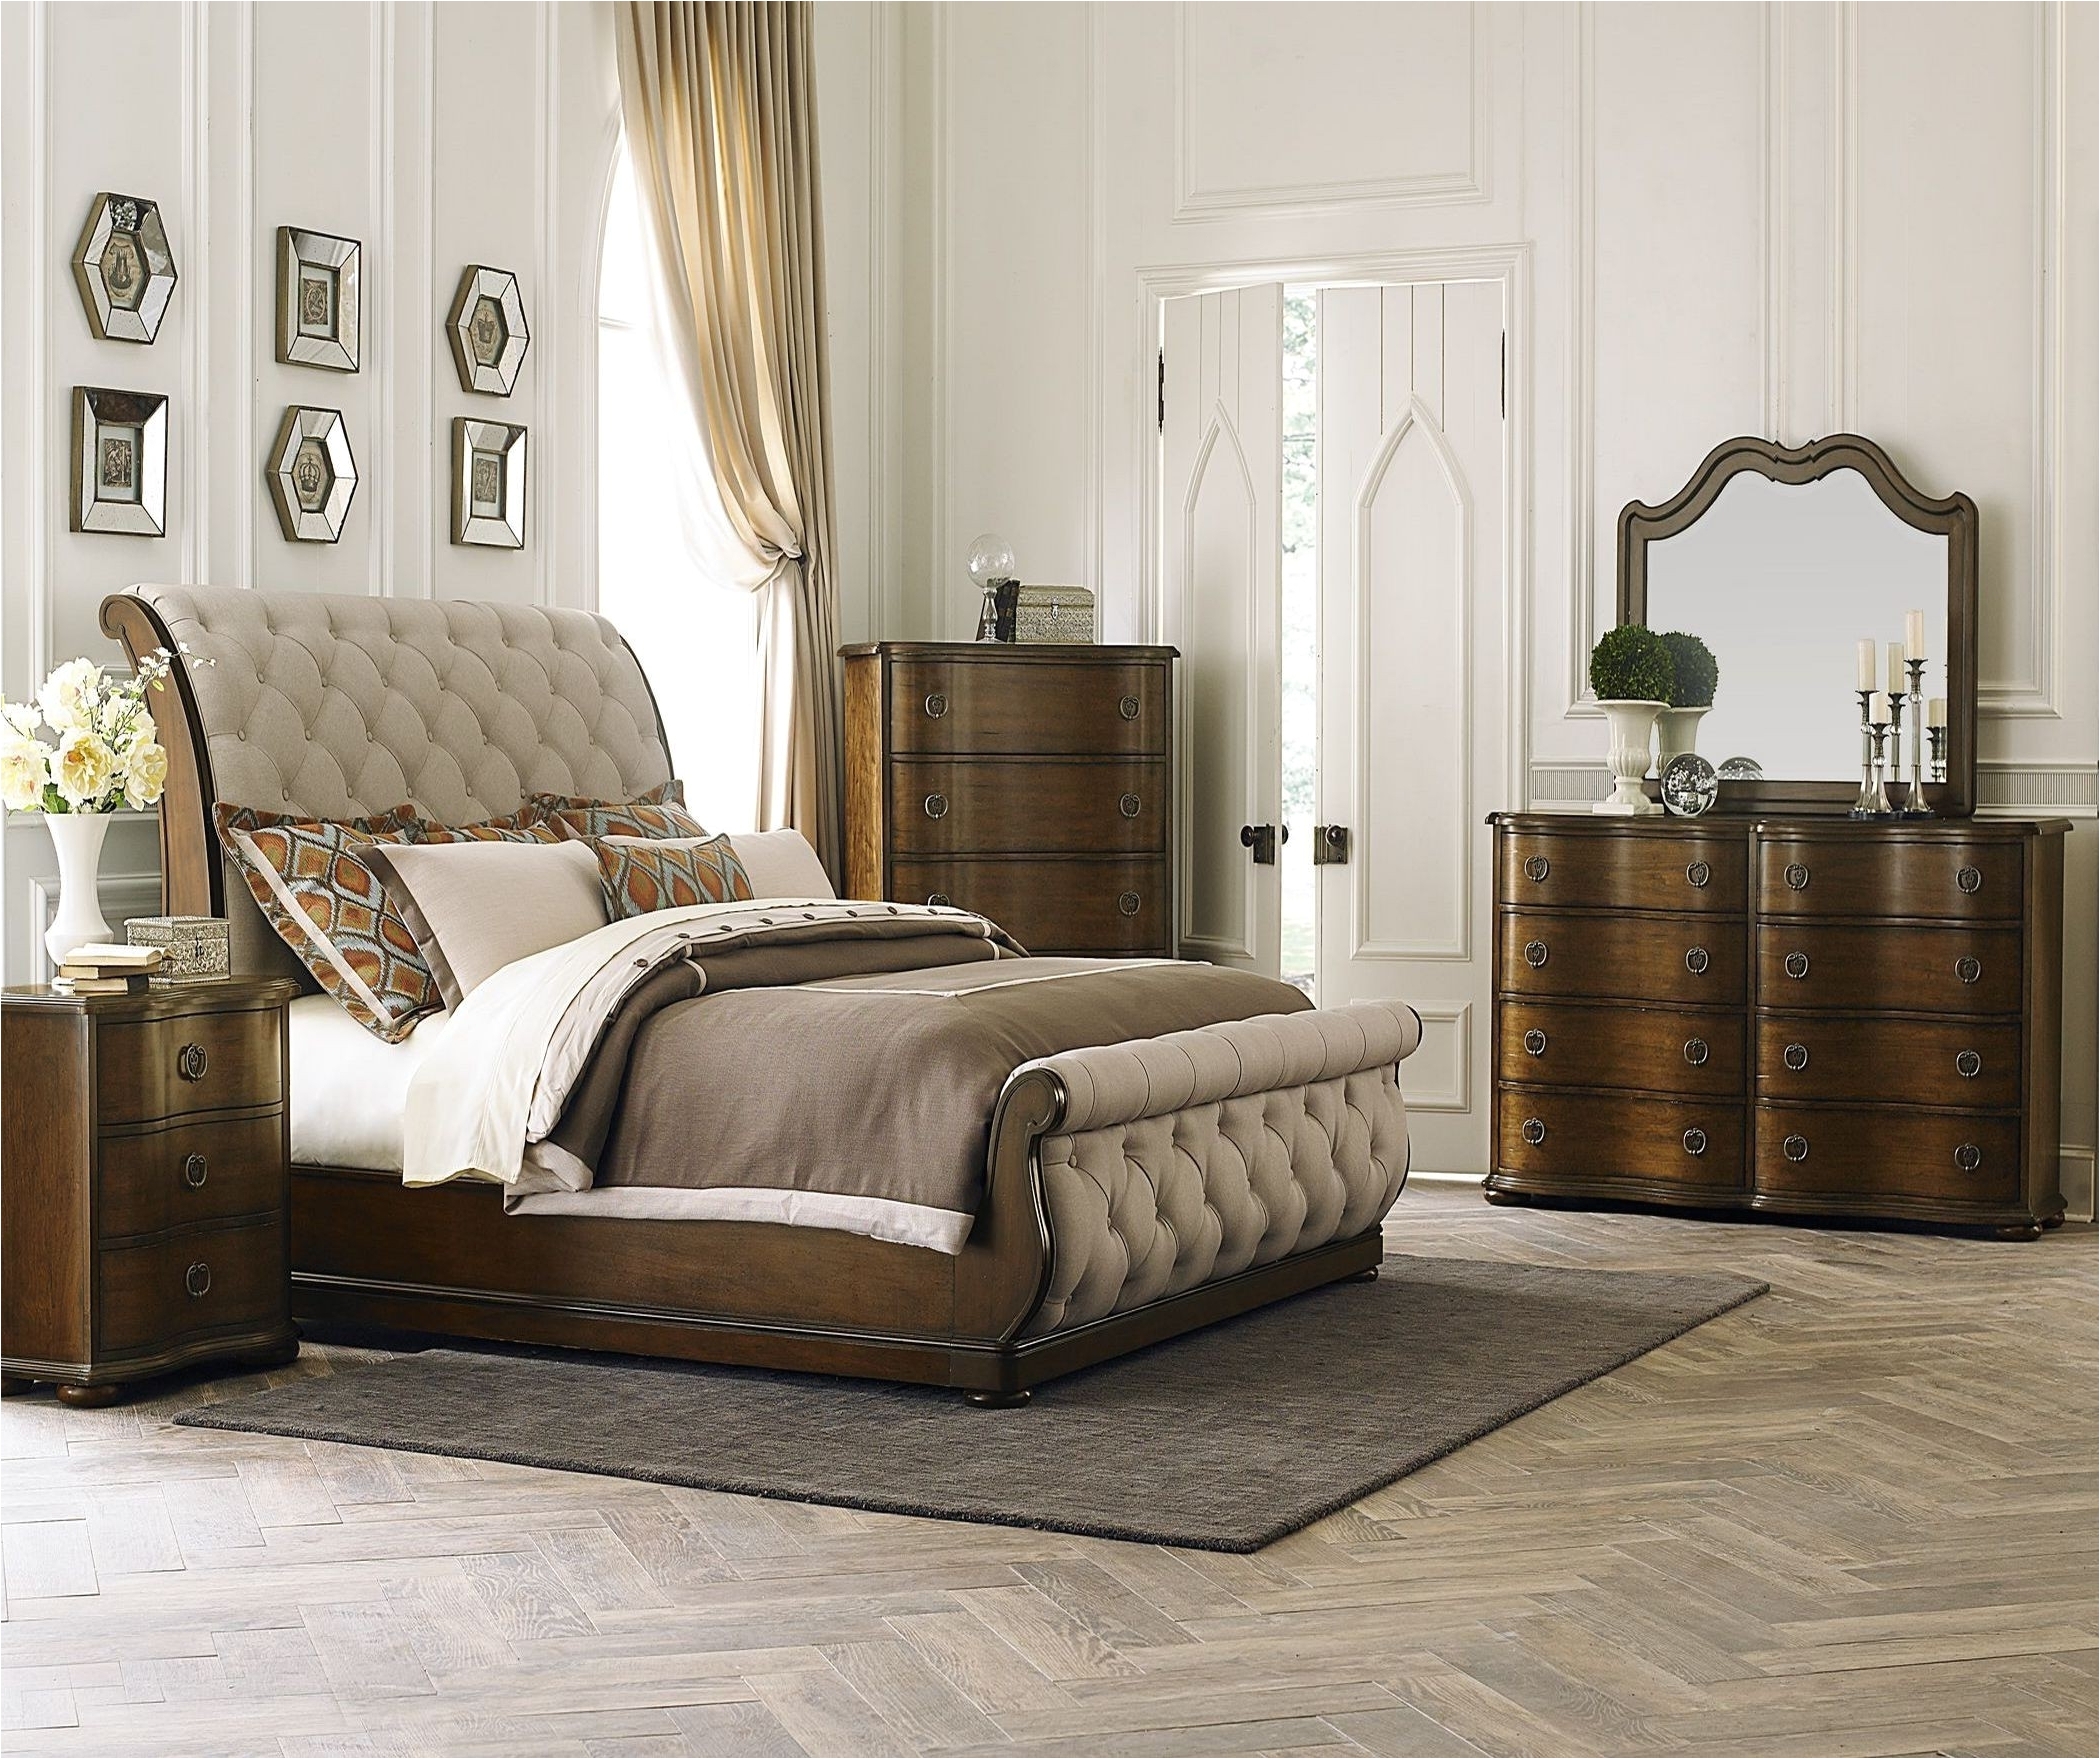 design sofia vergara cambrian court chocolate nightstand phenomenal bedroom collection home ideas ikea duckdns